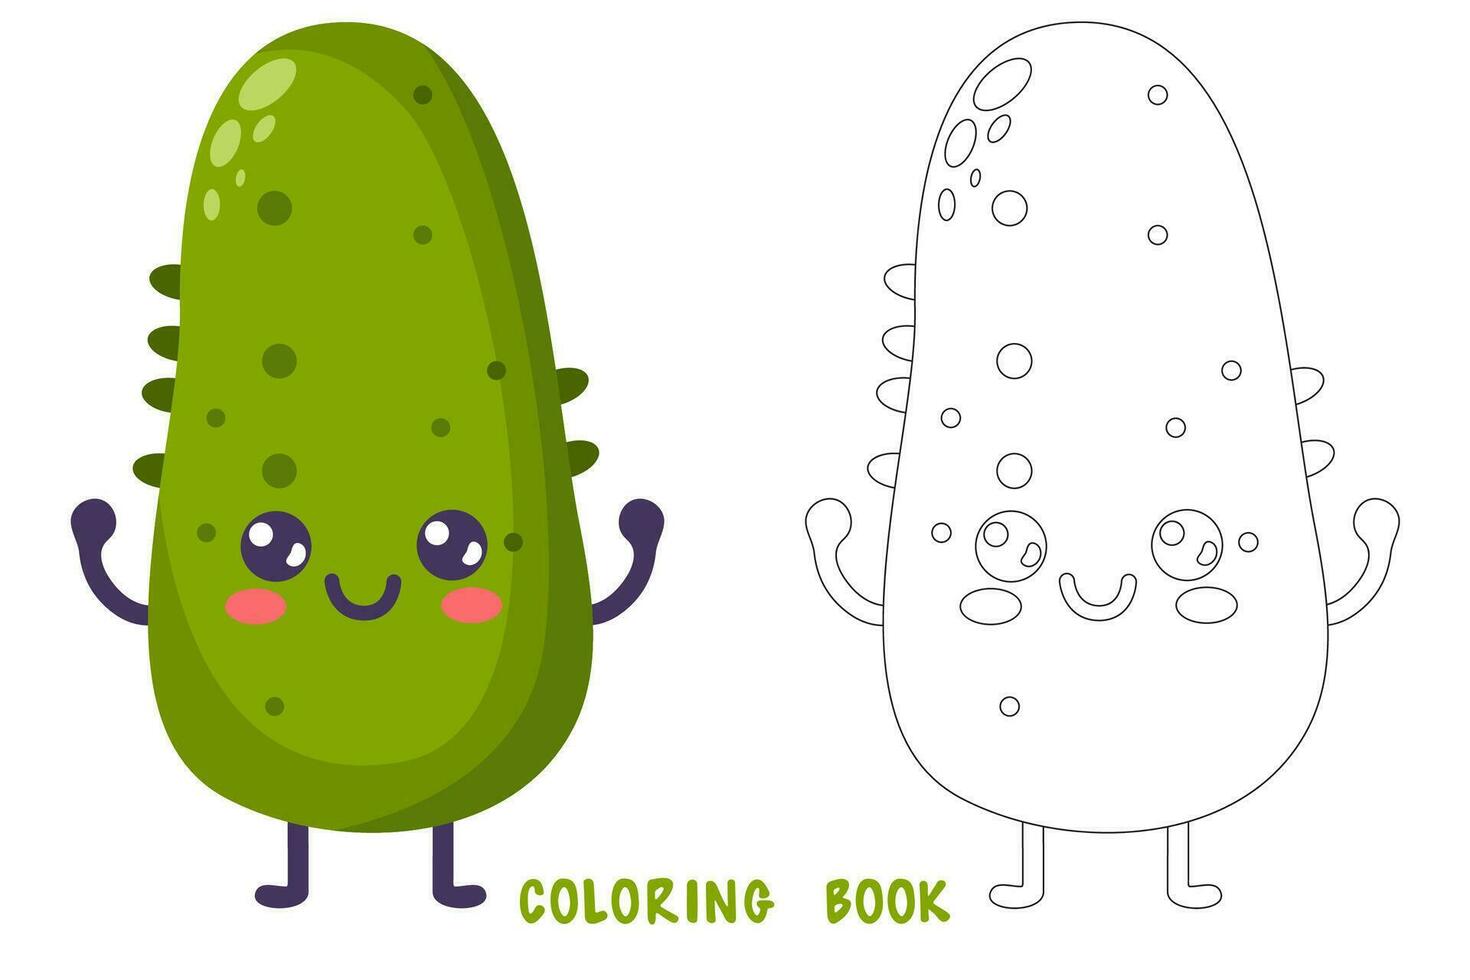 kleur boek van groovy tekenfilm schattig komkommer vector